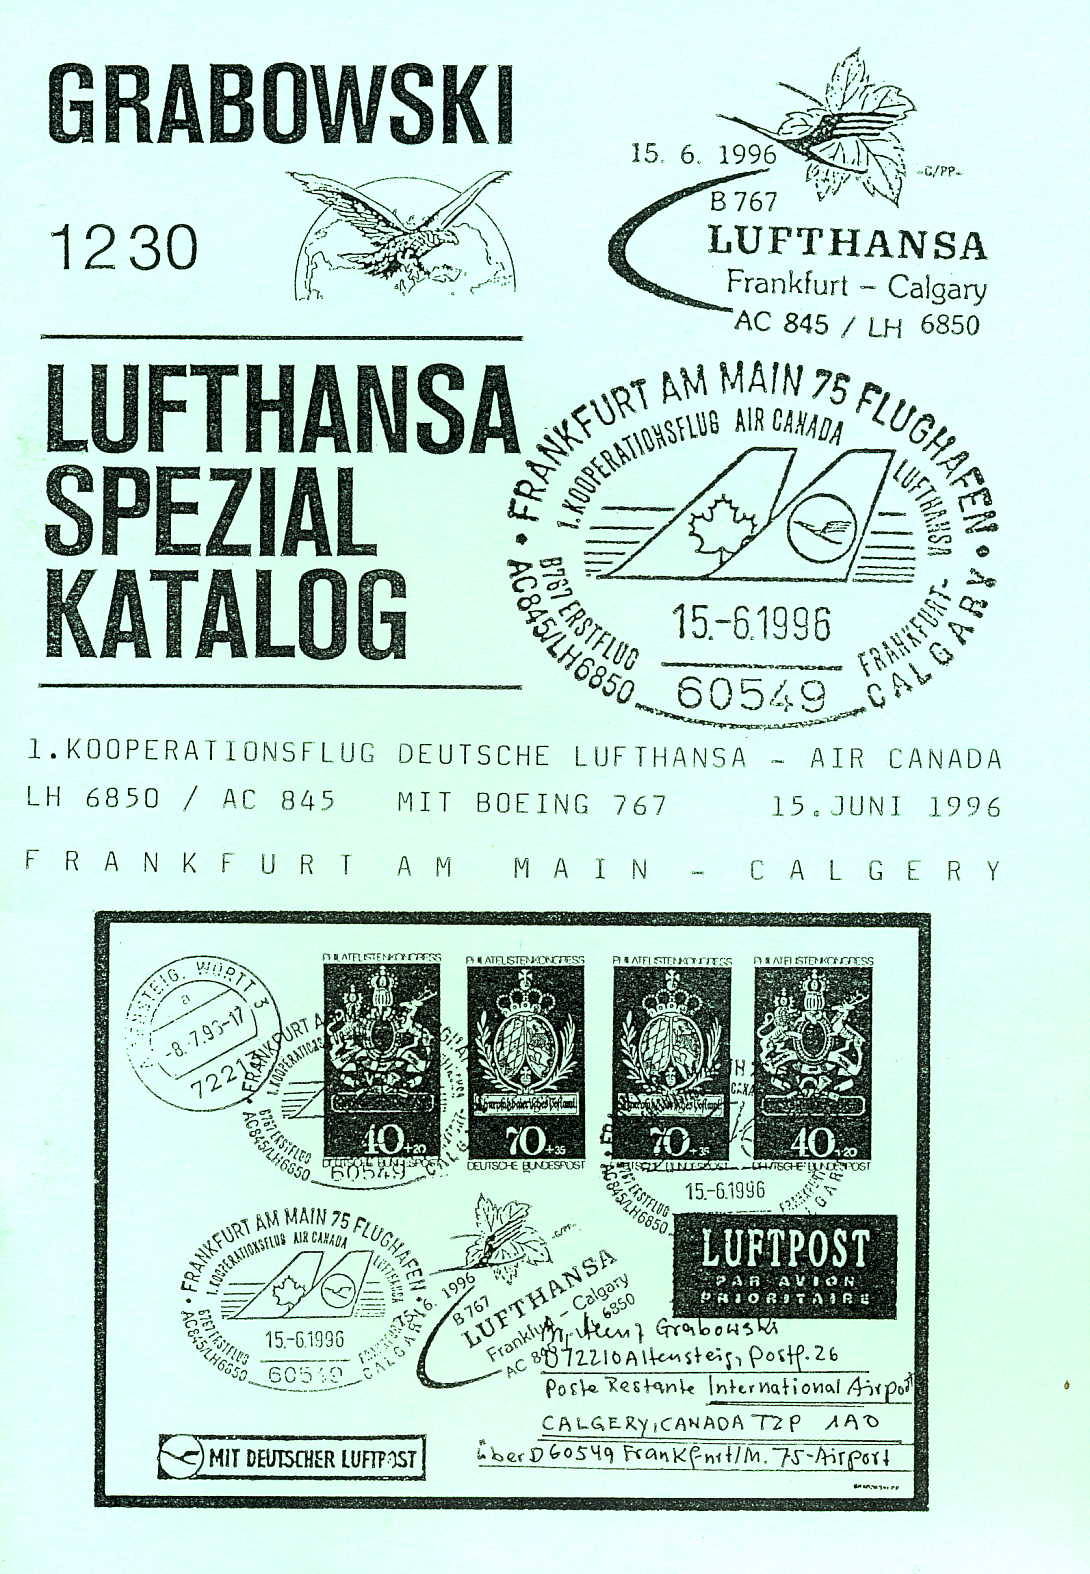 Grabowski Lufthansa-Spezialkatalog Flug Nr. 1230